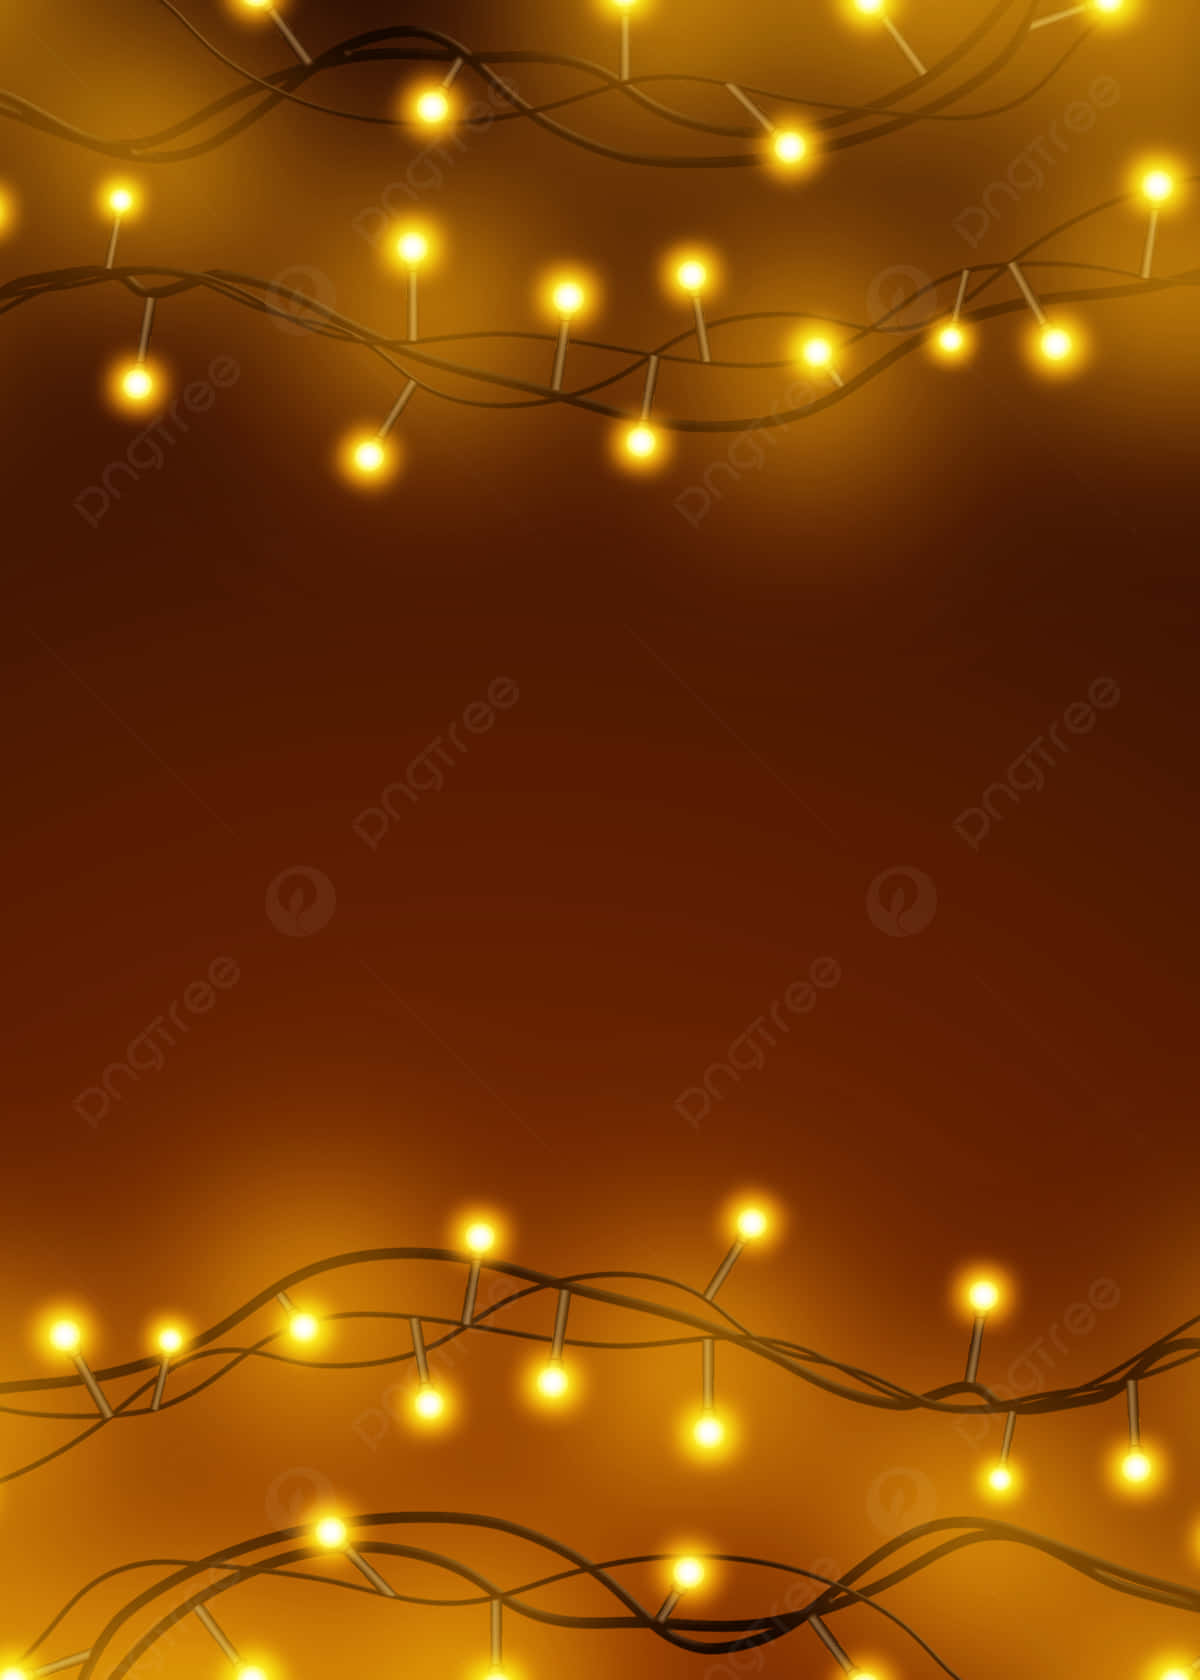 Christmas Lights Background With Golden Lights Wallpaper